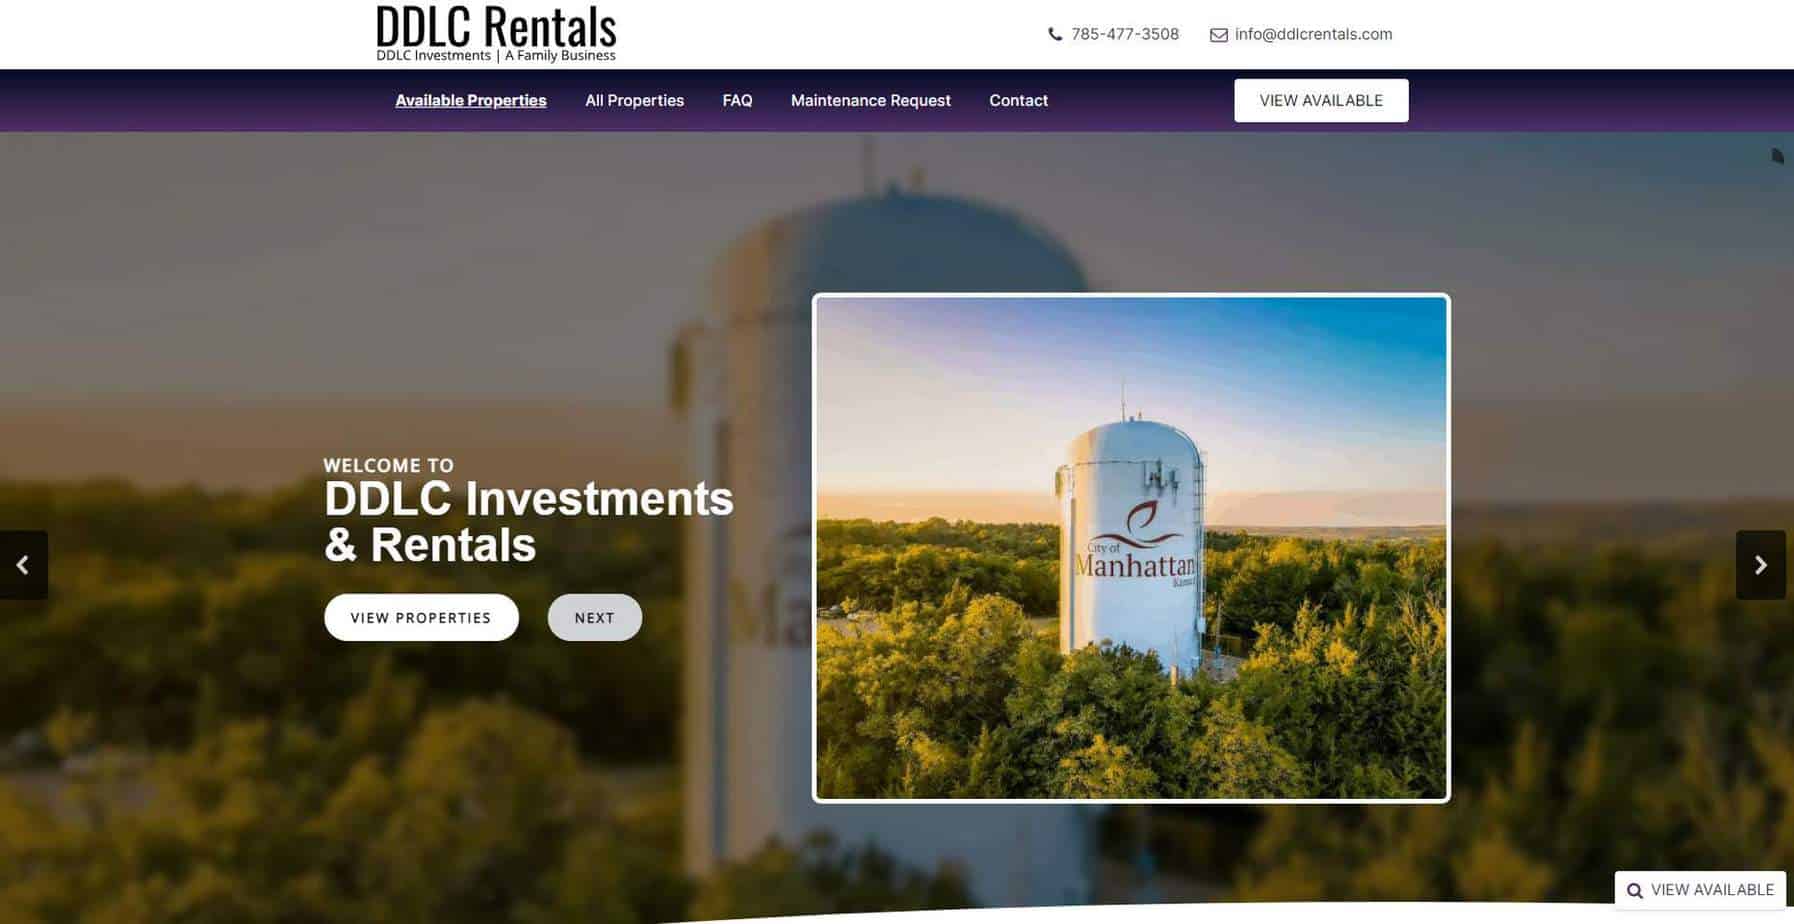 DDLC Investment's New Website